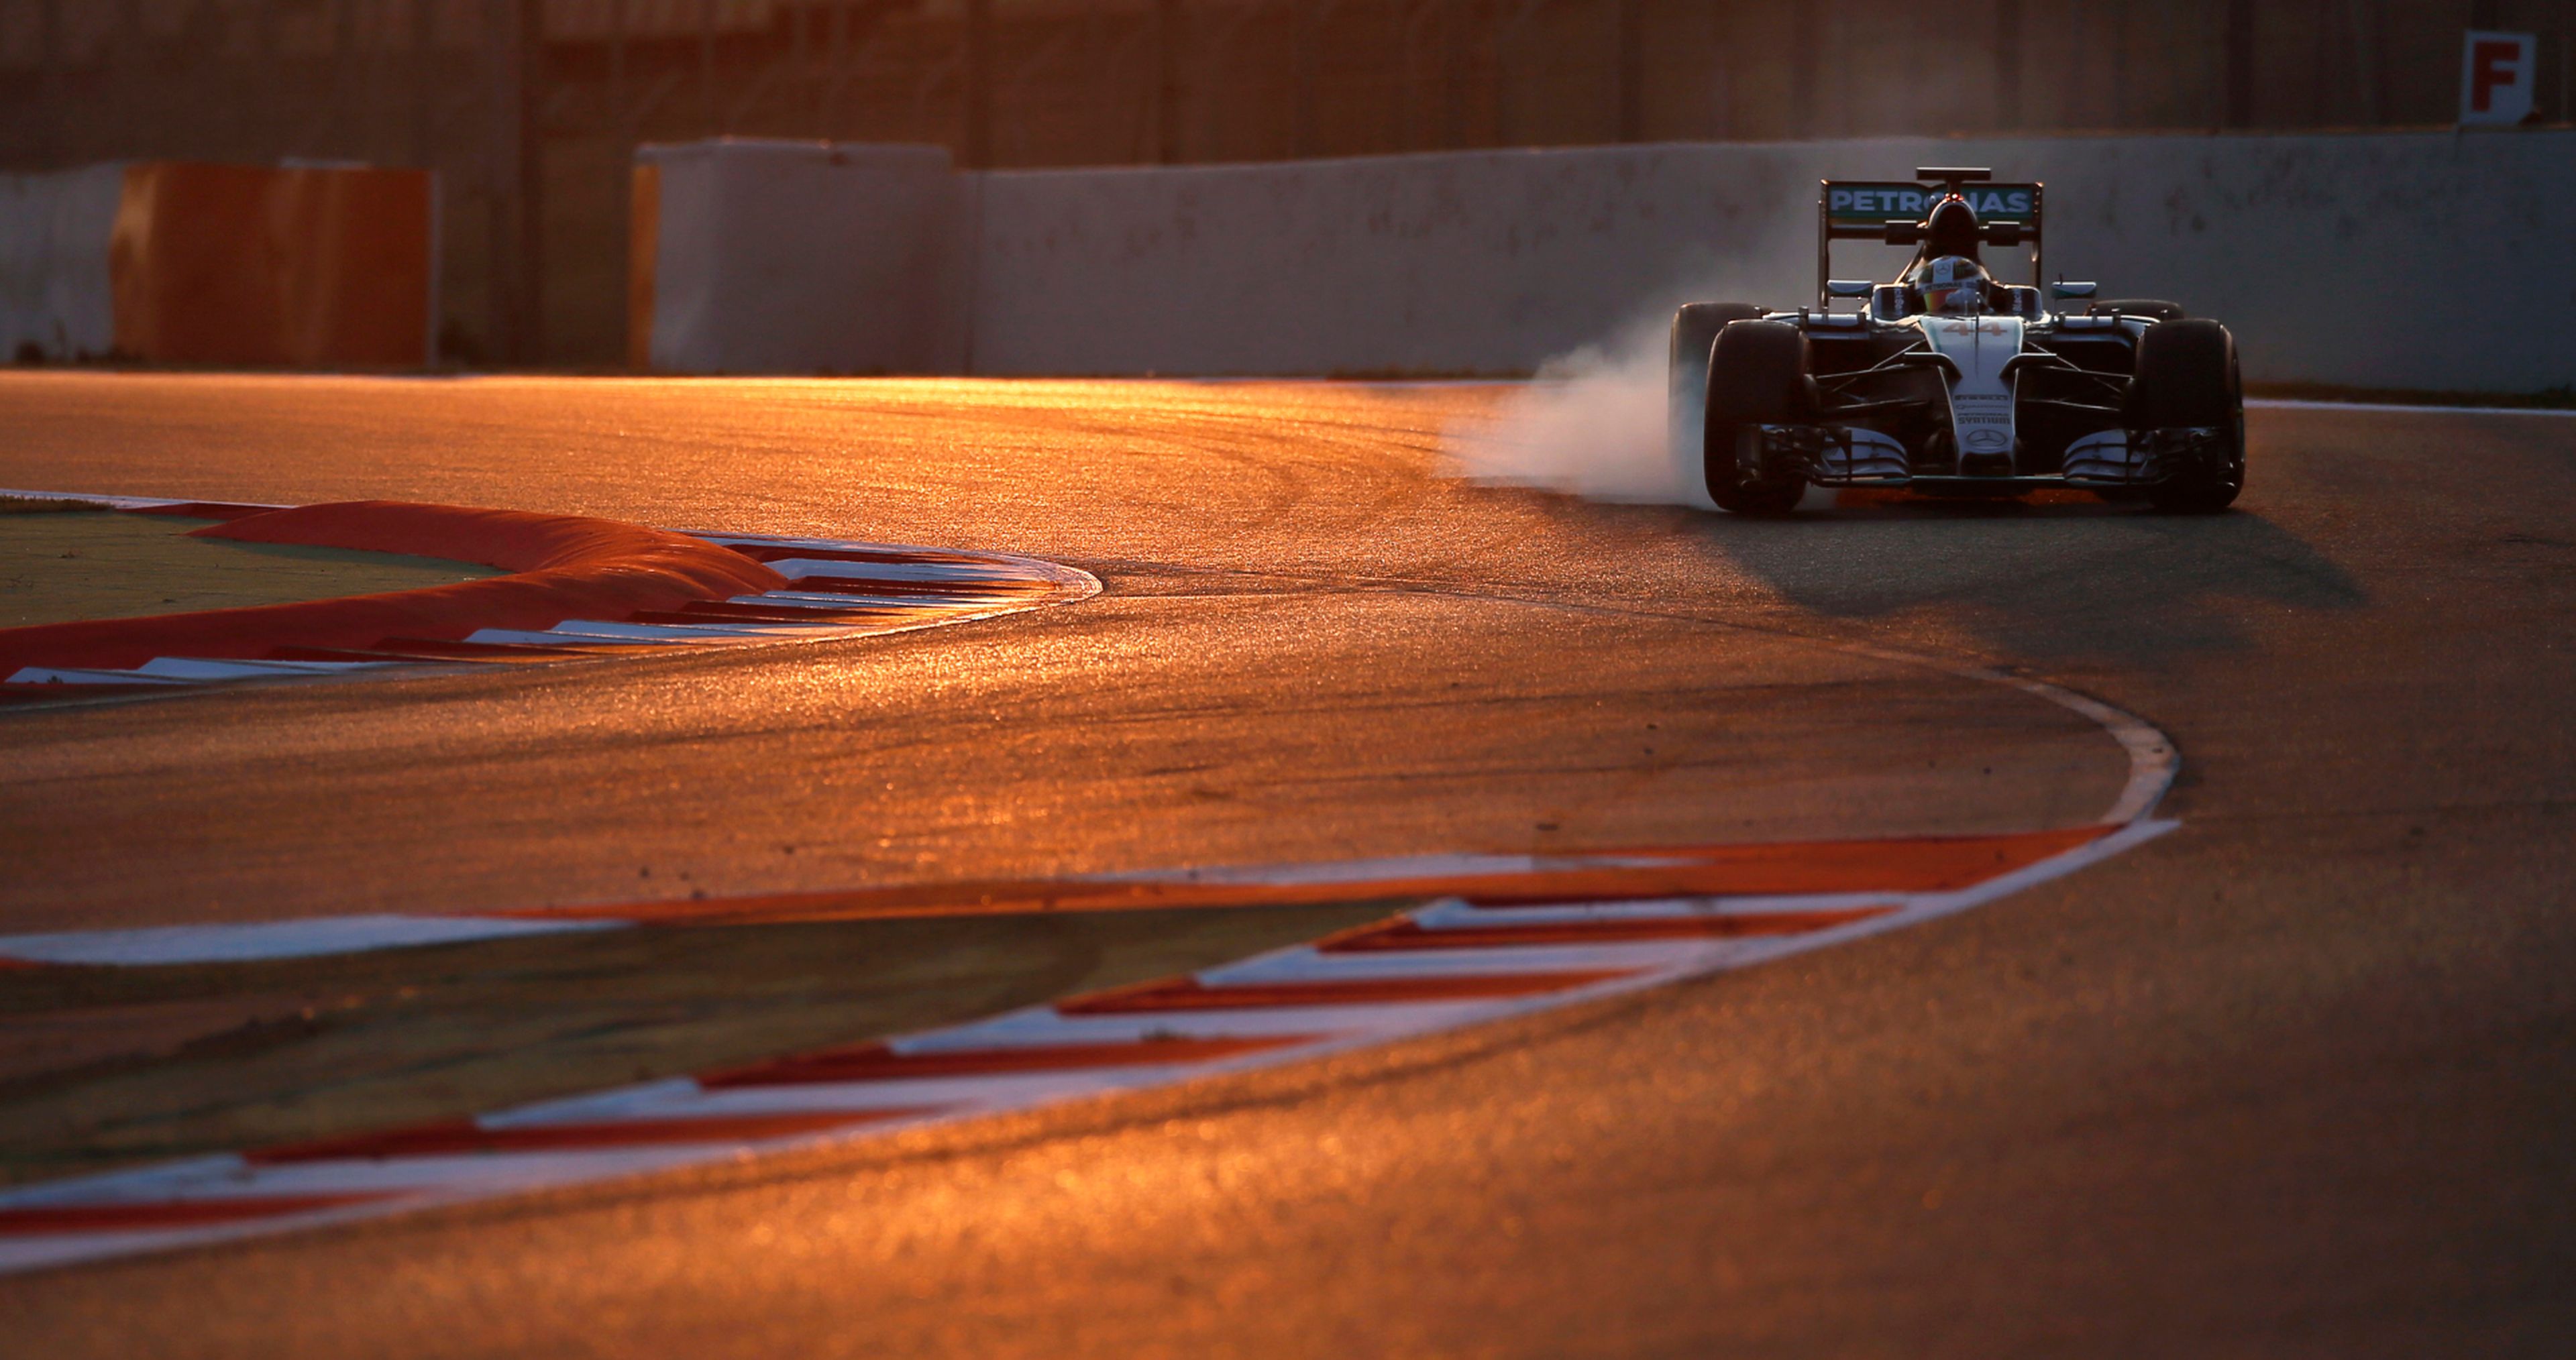 El coche de Fórmula 1 de Lewis Hamilton frena en una curva del circuito de Montmeló